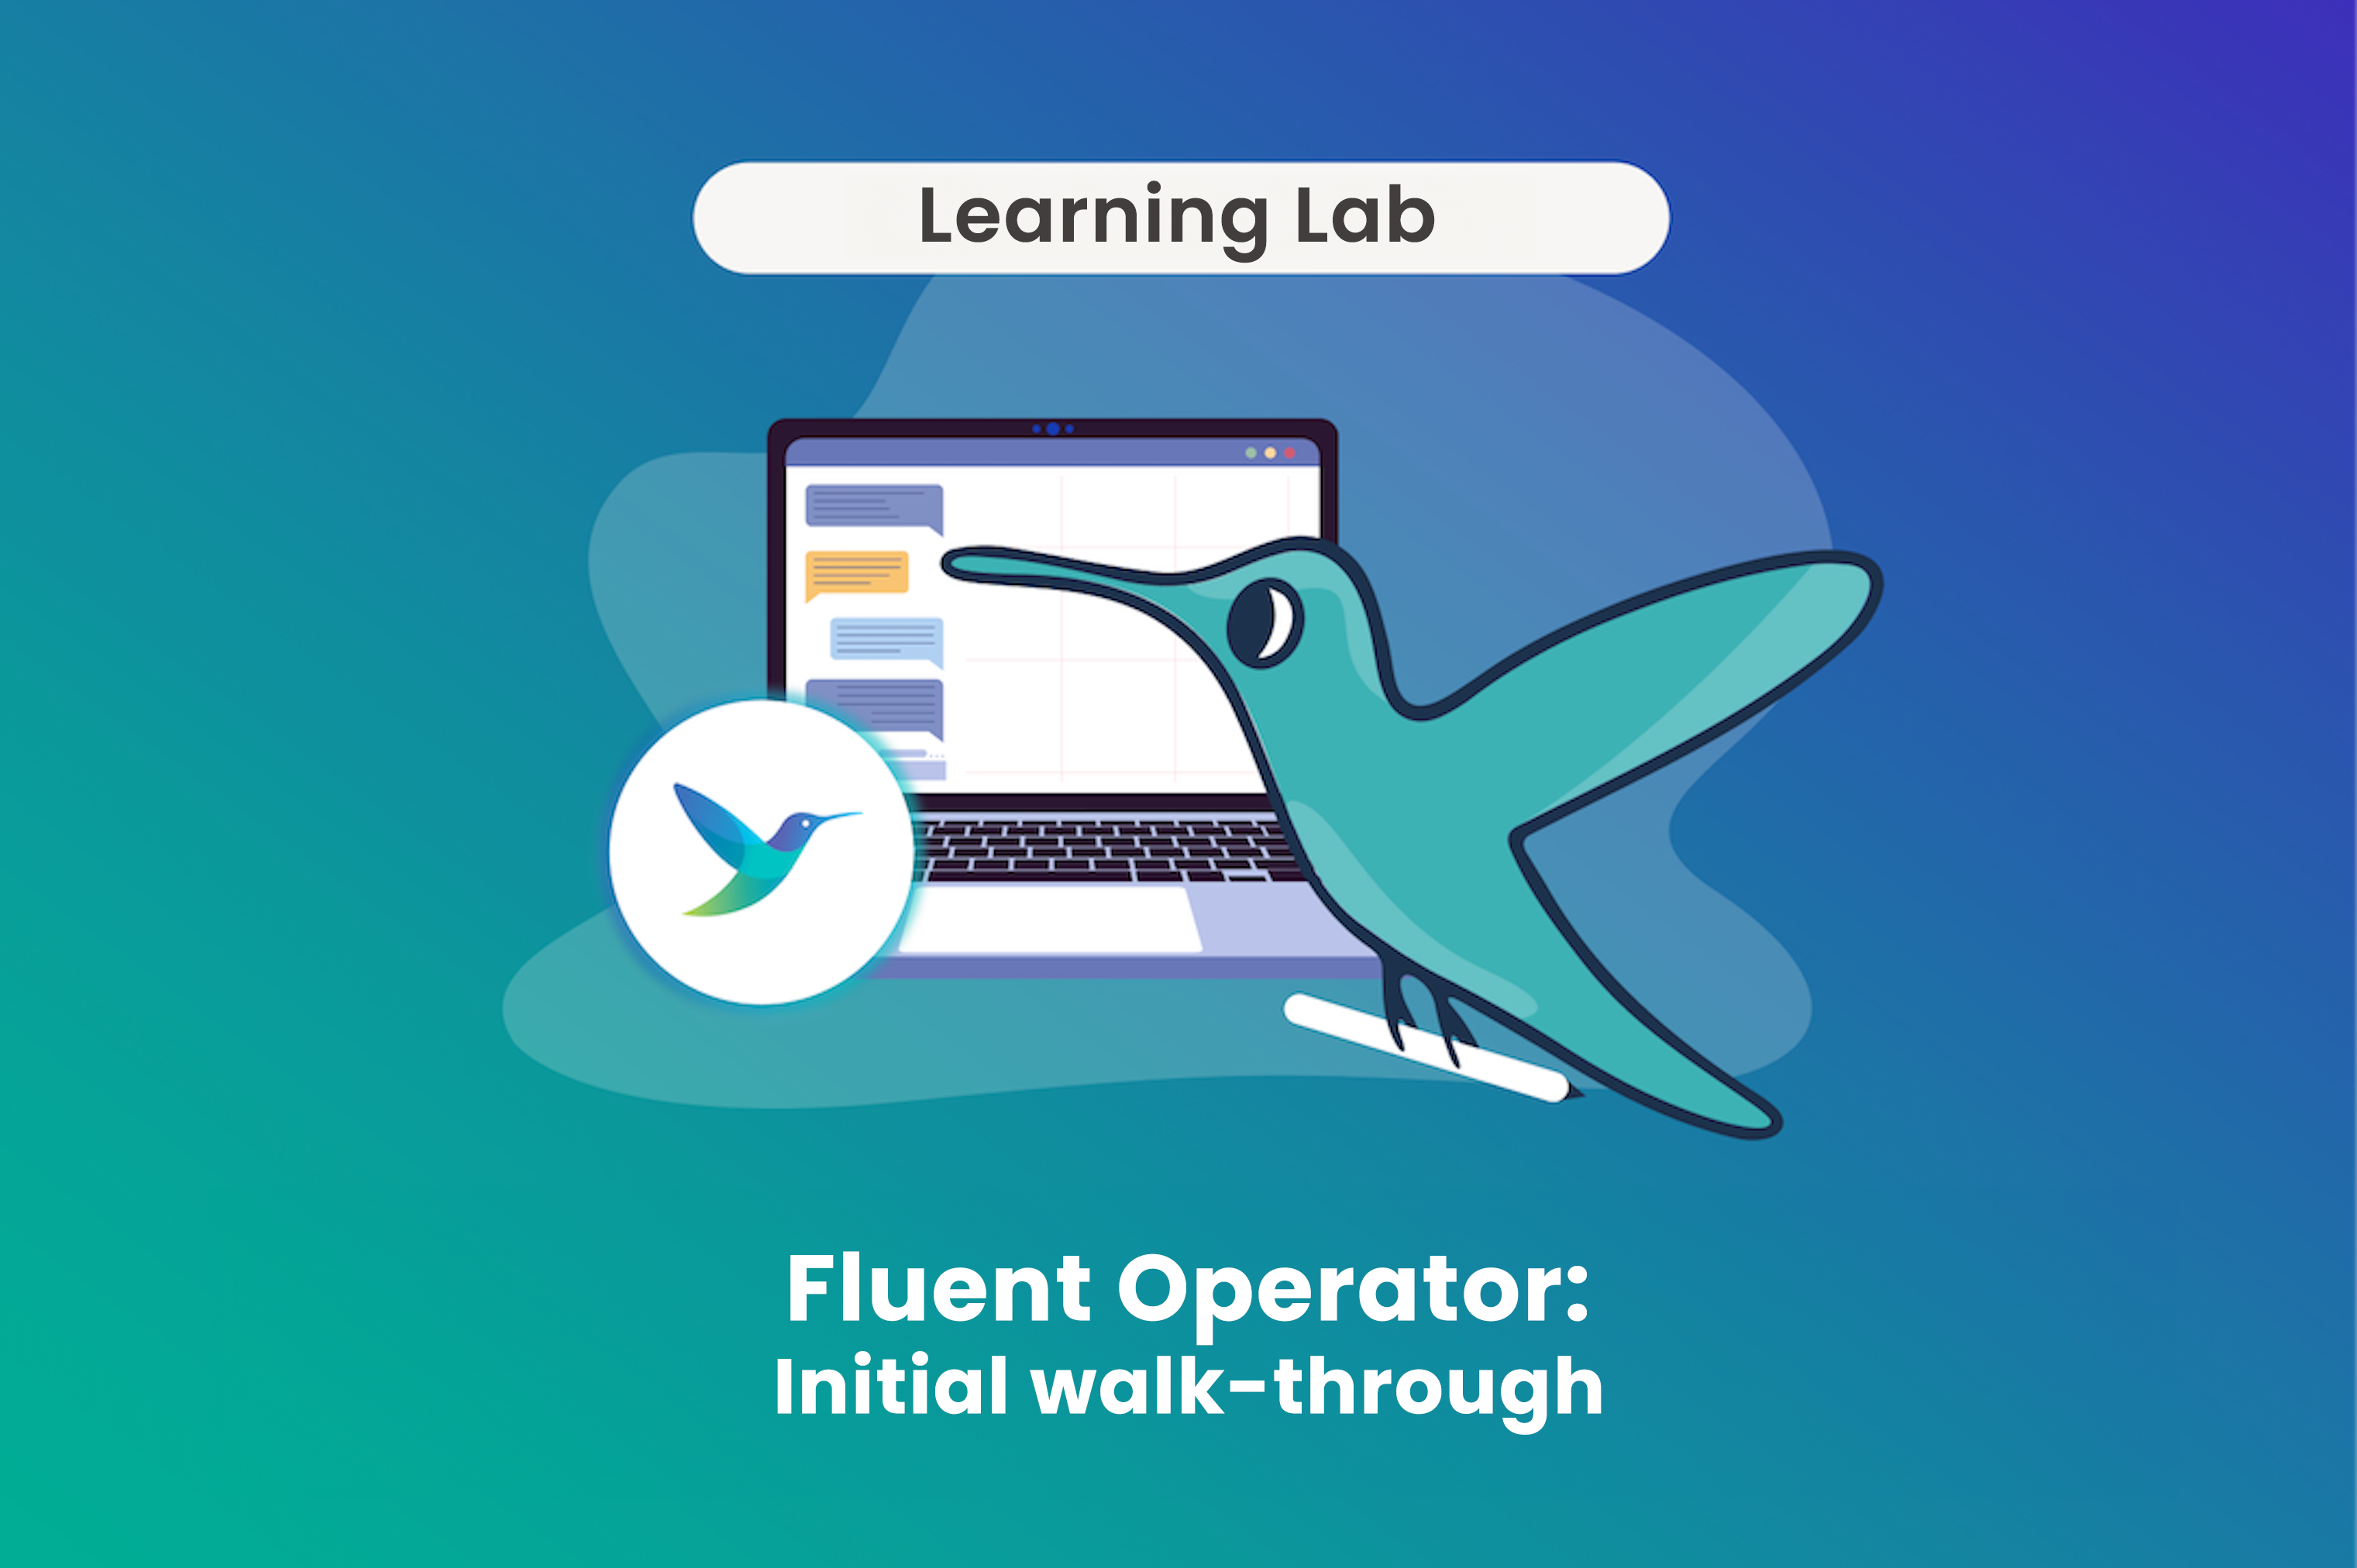 Fluent Operator initial walk-through